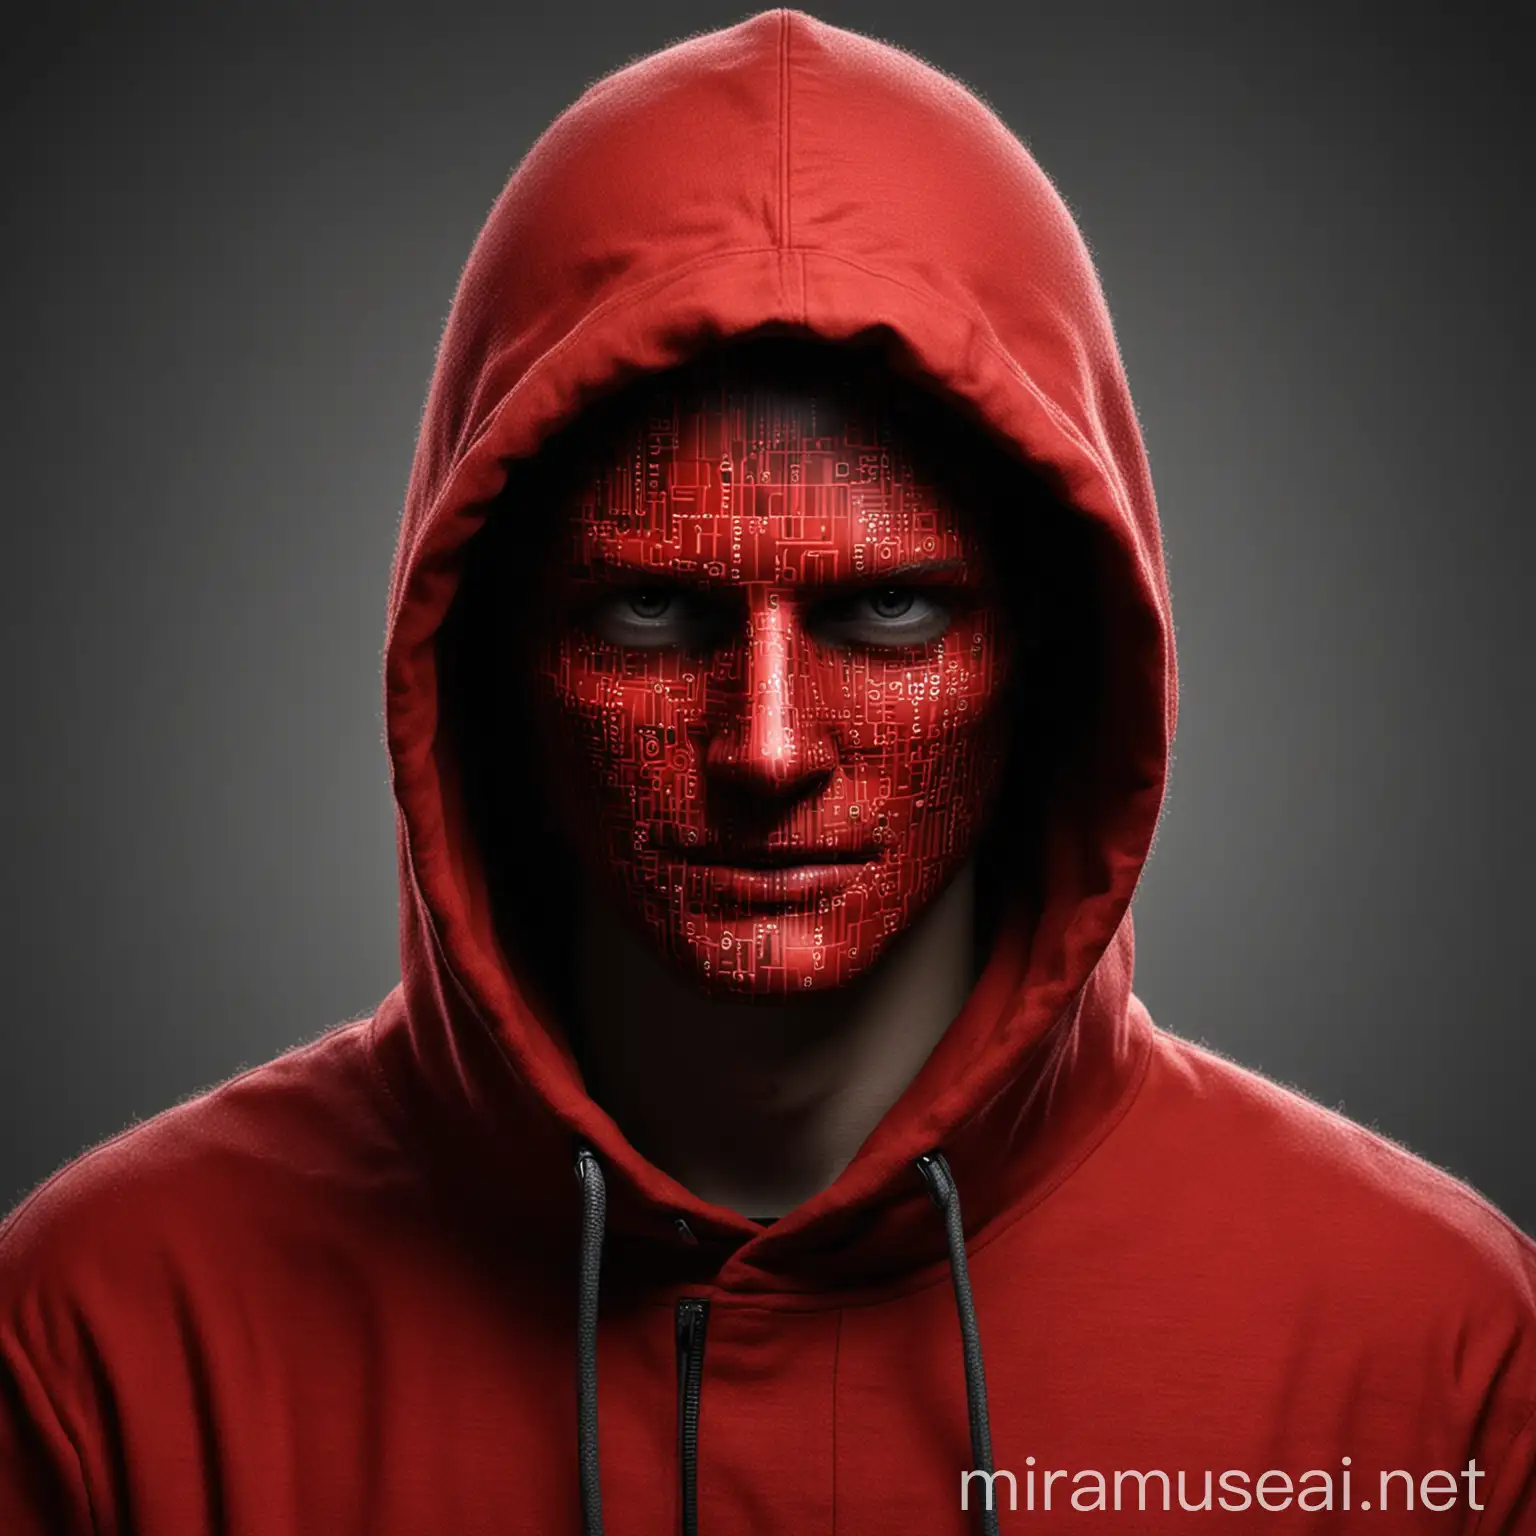 Realistic RedHooded Hacker Portrait